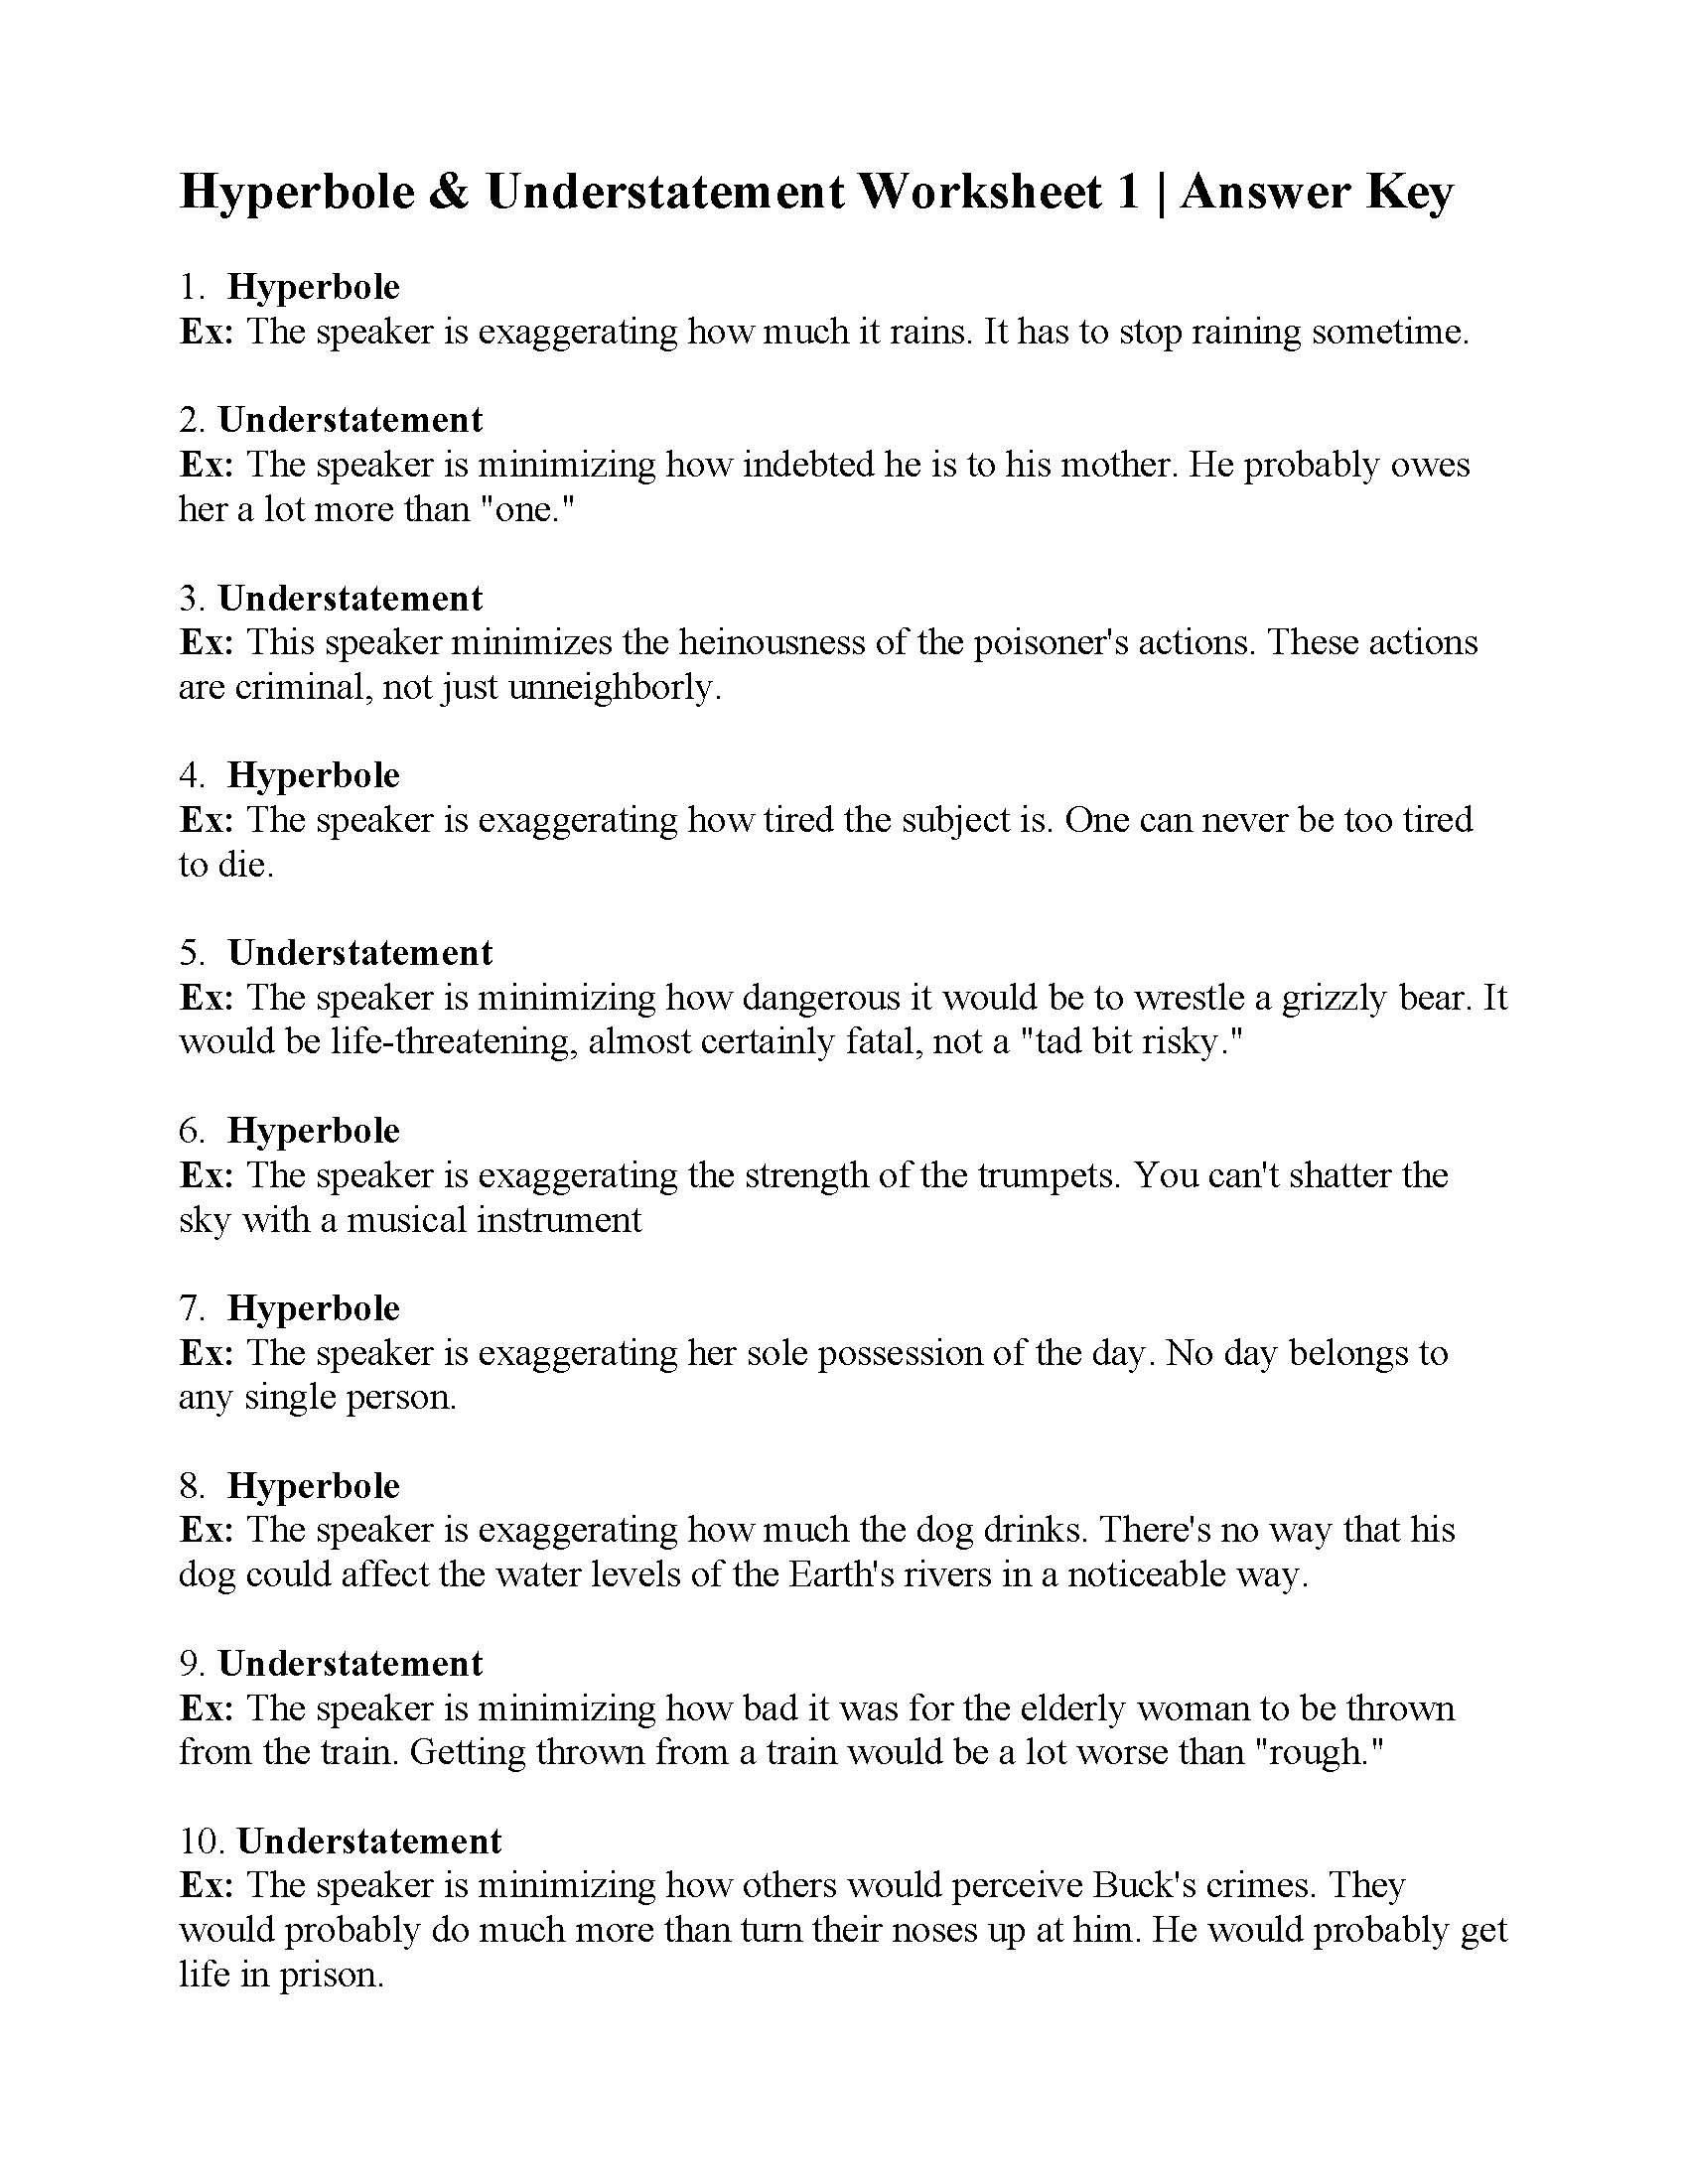 Hyperbole And Understatement Worksheet 1  Answers Throughout Hyperbole Worksheet 1 Answers